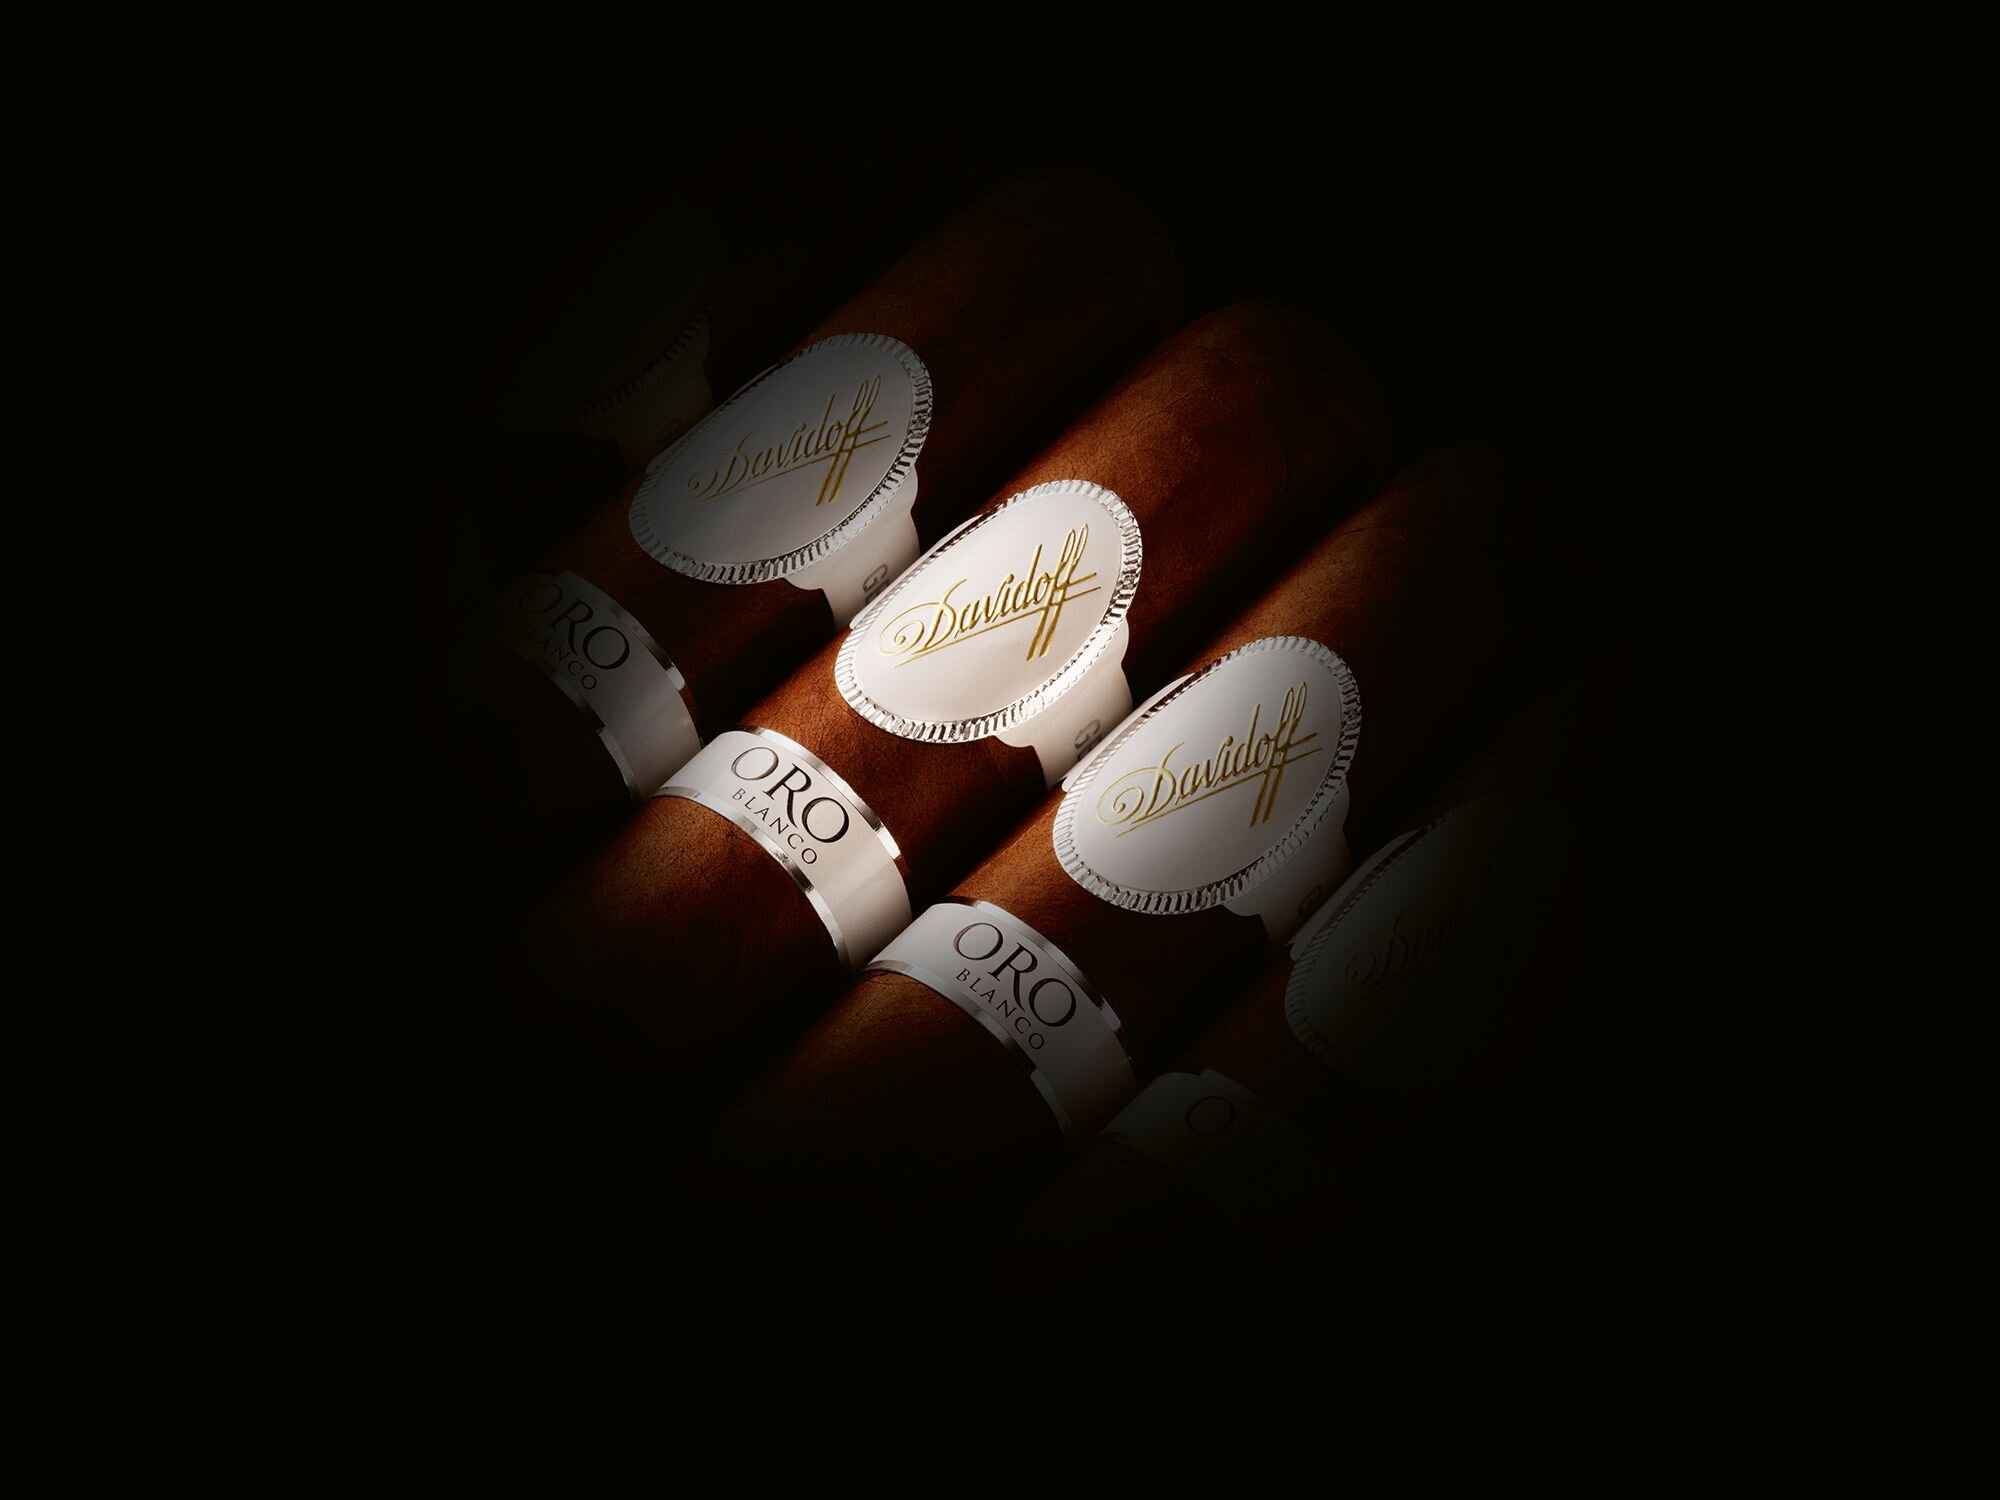 Oro Blanco cigars